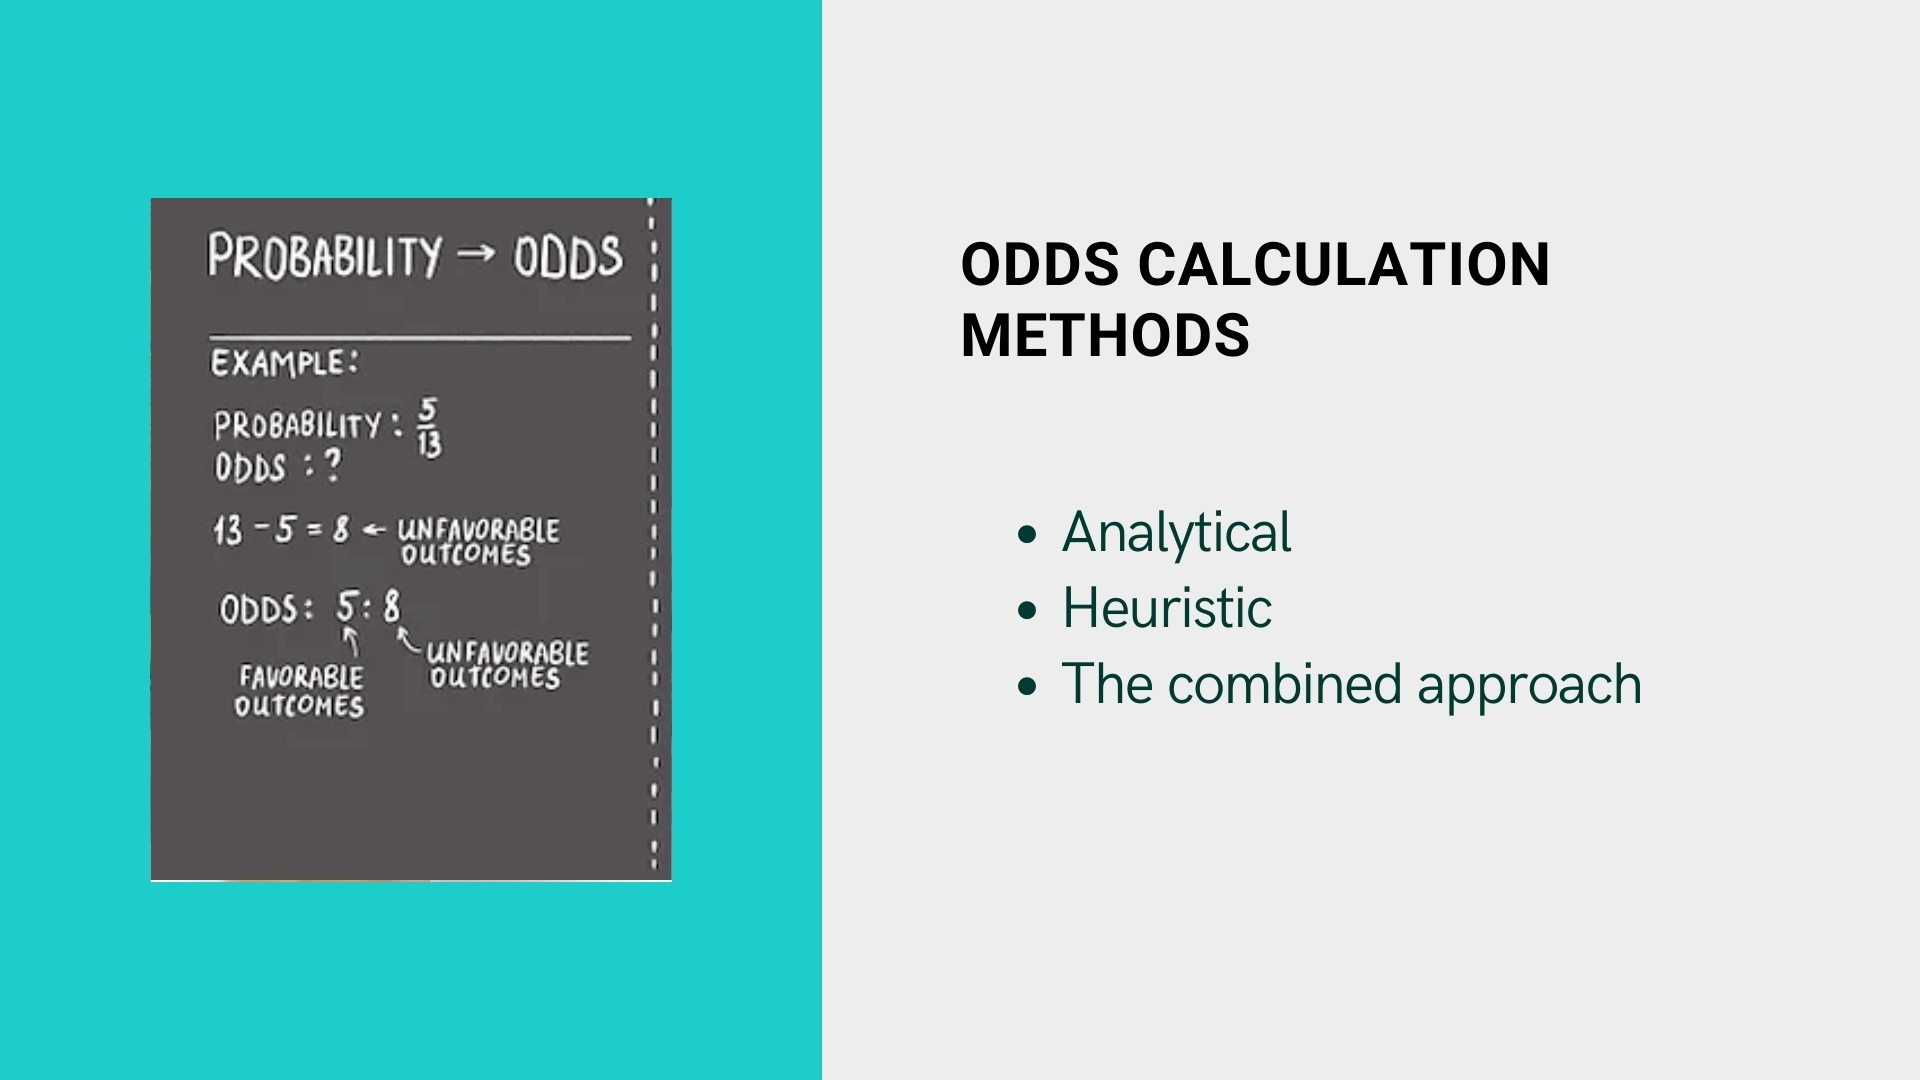 Odds calculation methods